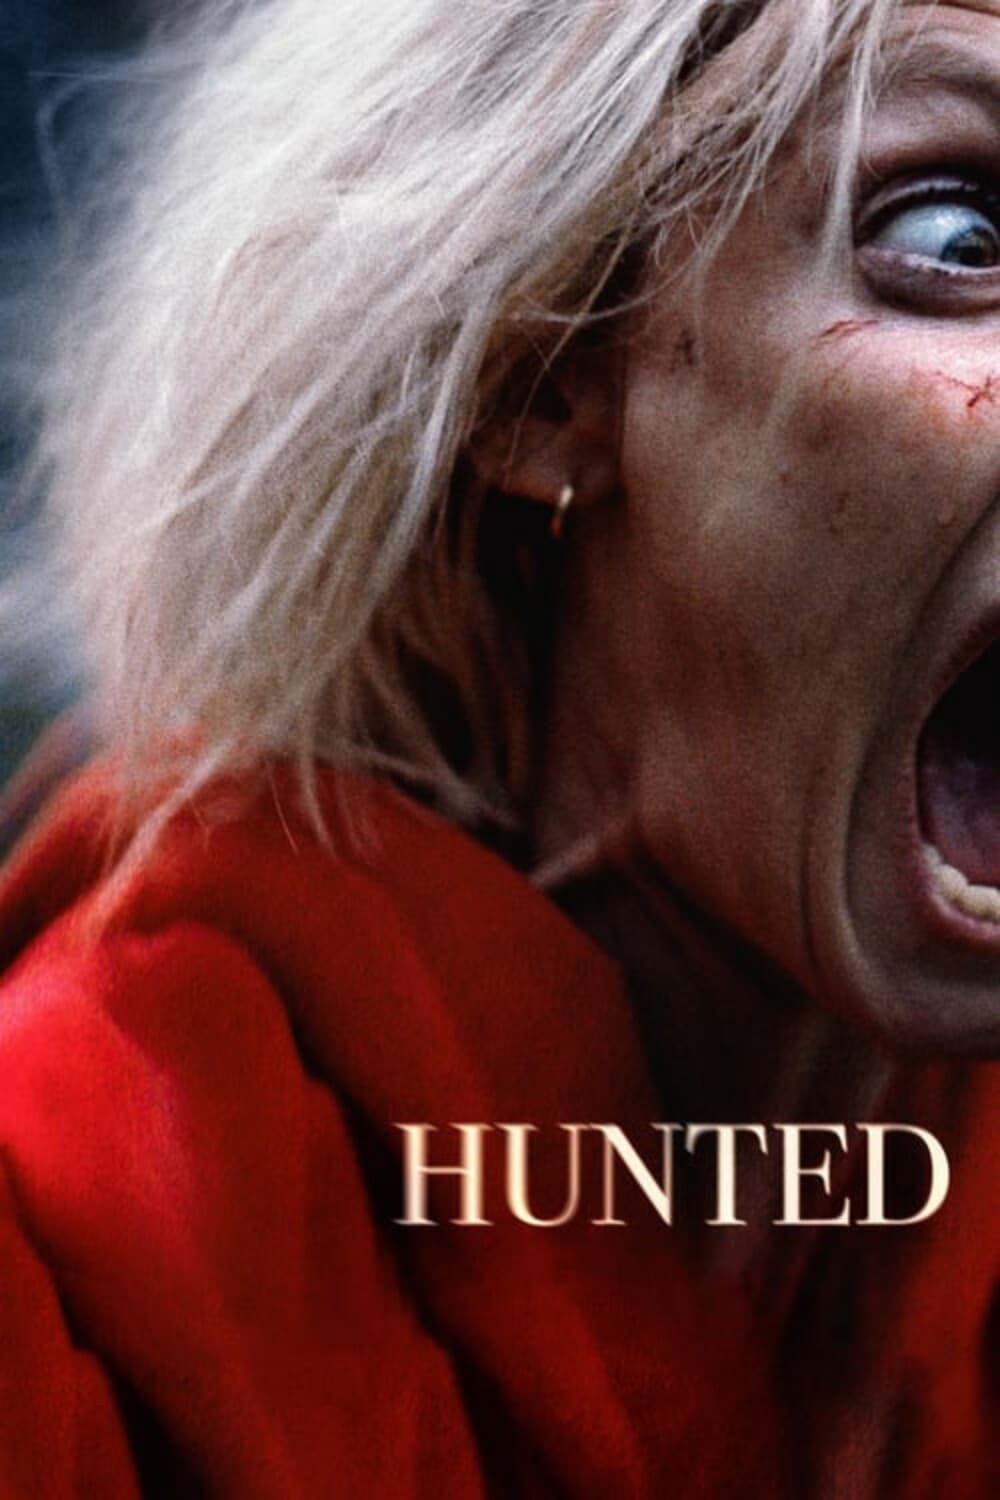 Hunted (2021)